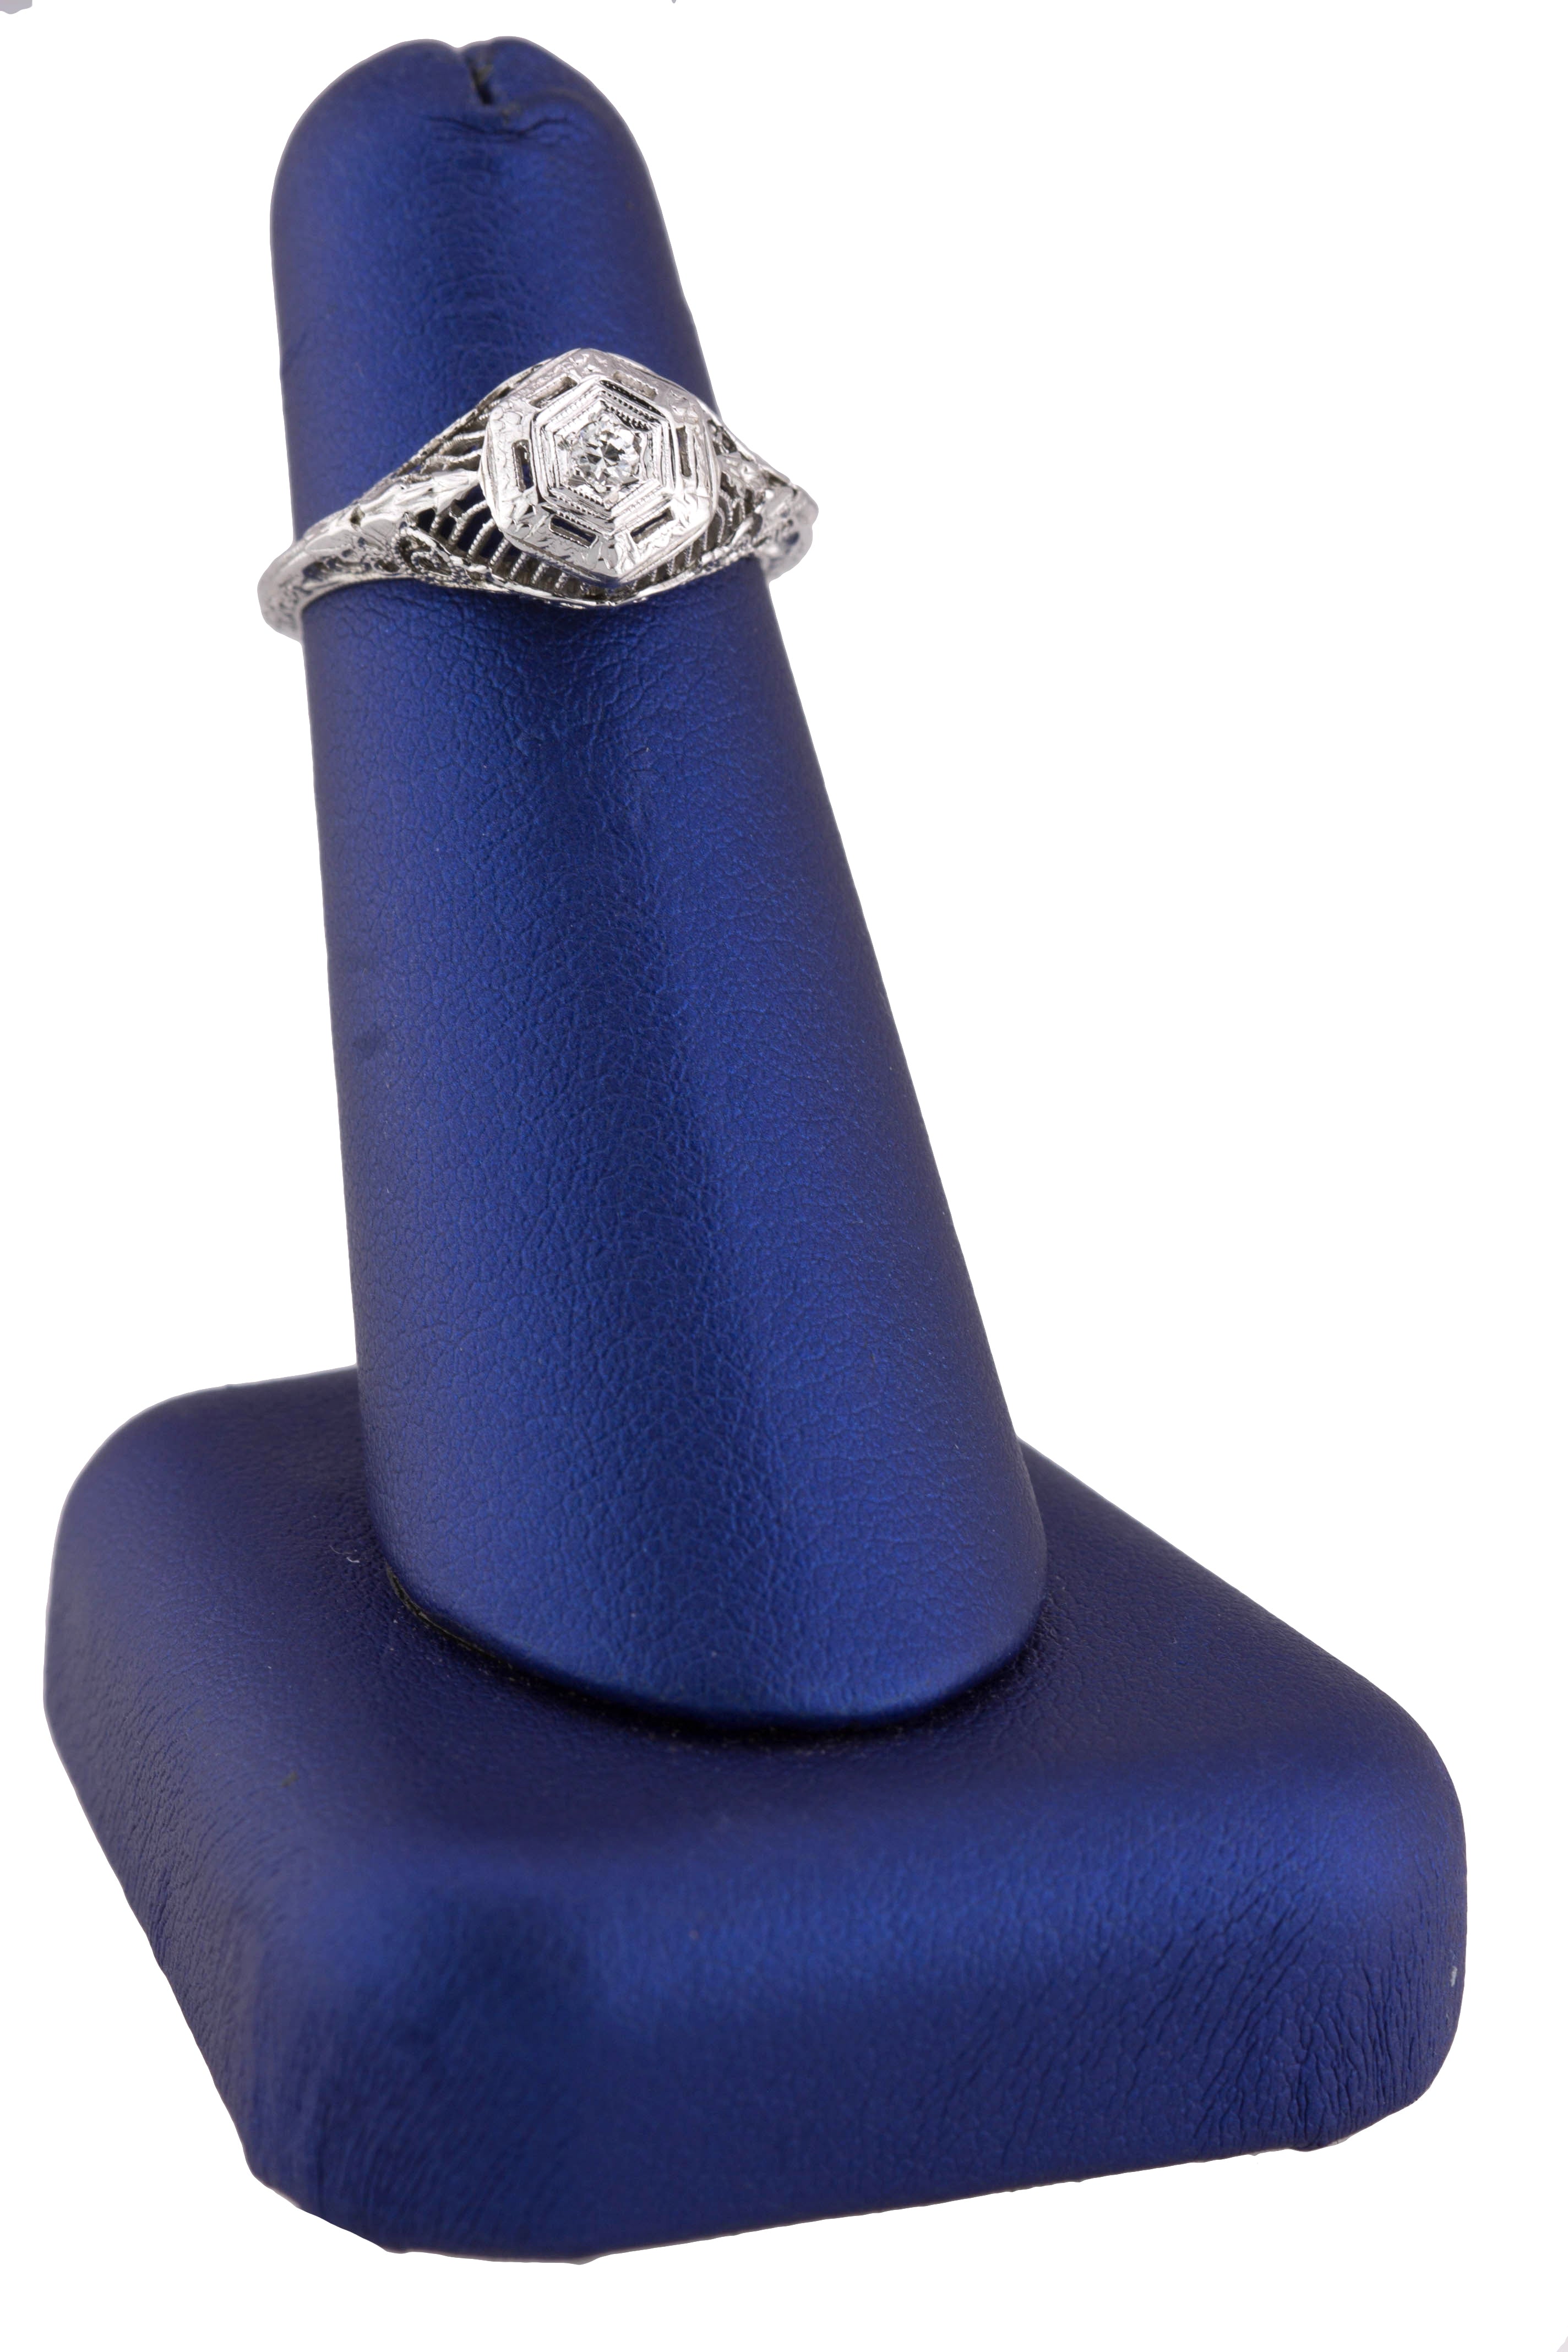 Antique Art Deco 18K White Gold .06CT Solitaire Diamond Filigree Engagement Ring